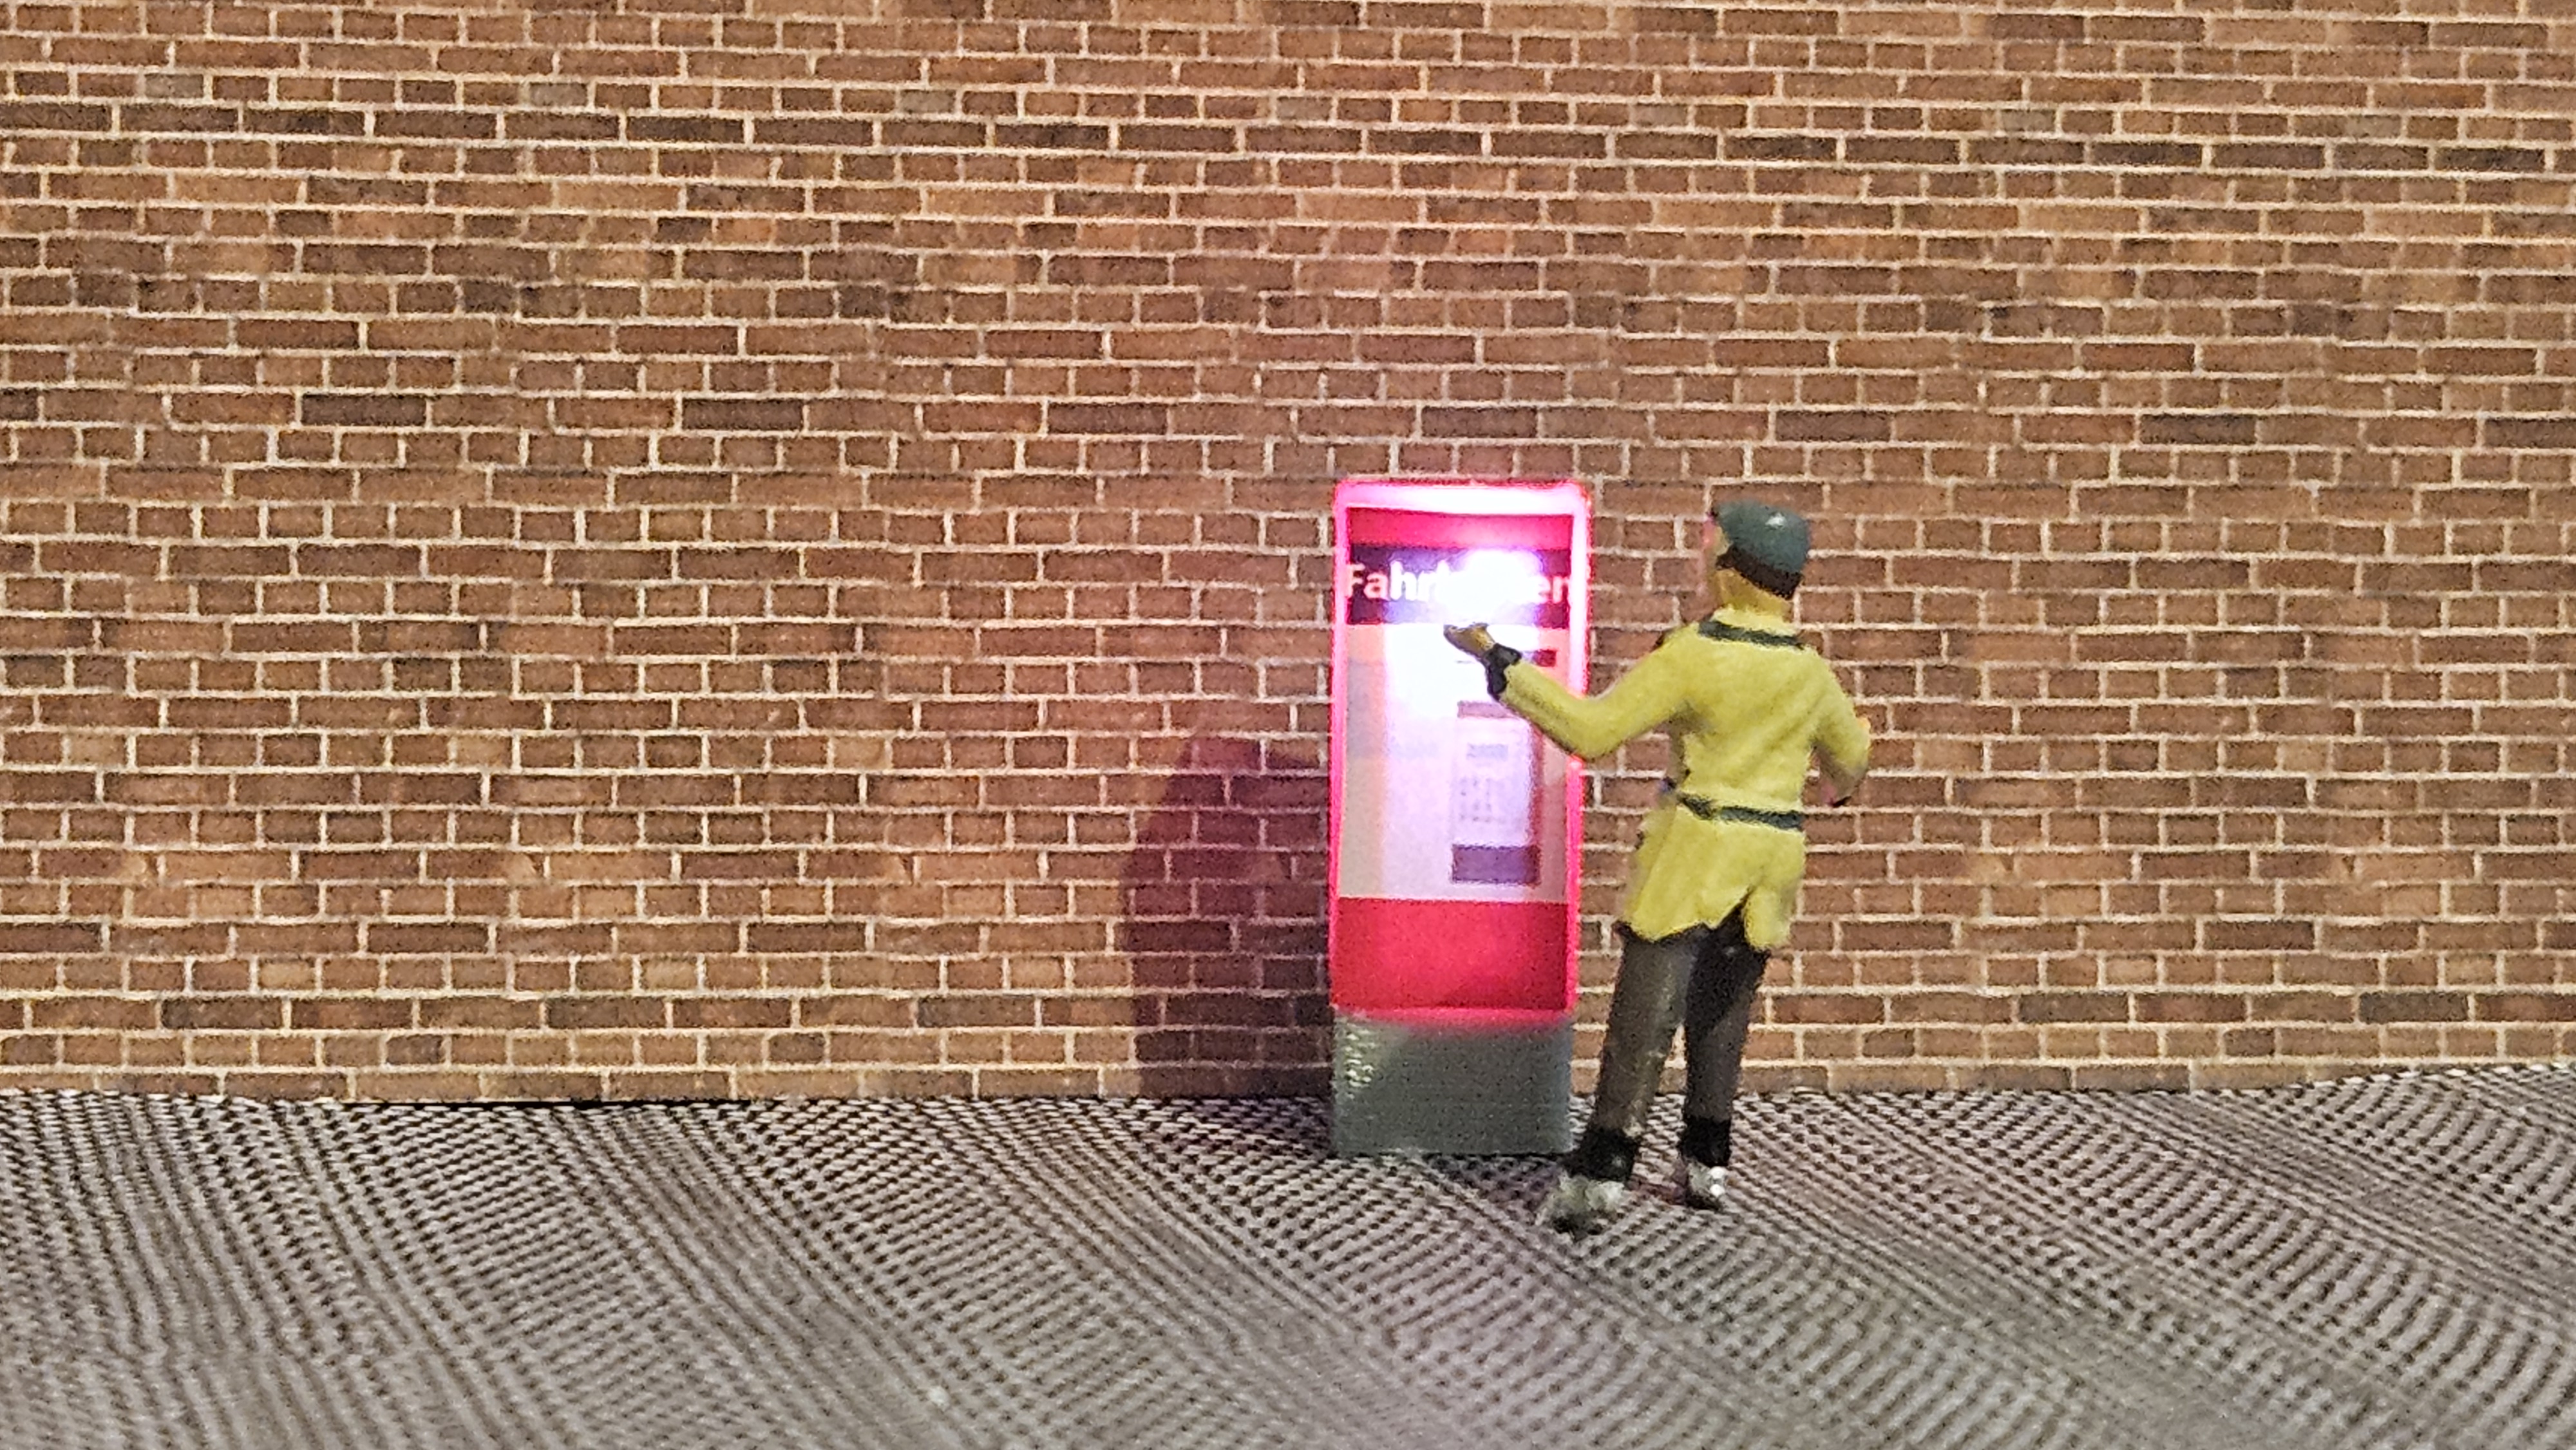 Ticketautomat Fahrkartenautomat mit LED  H0 |Bahnsteig| Bahnhof - Fertigmodell